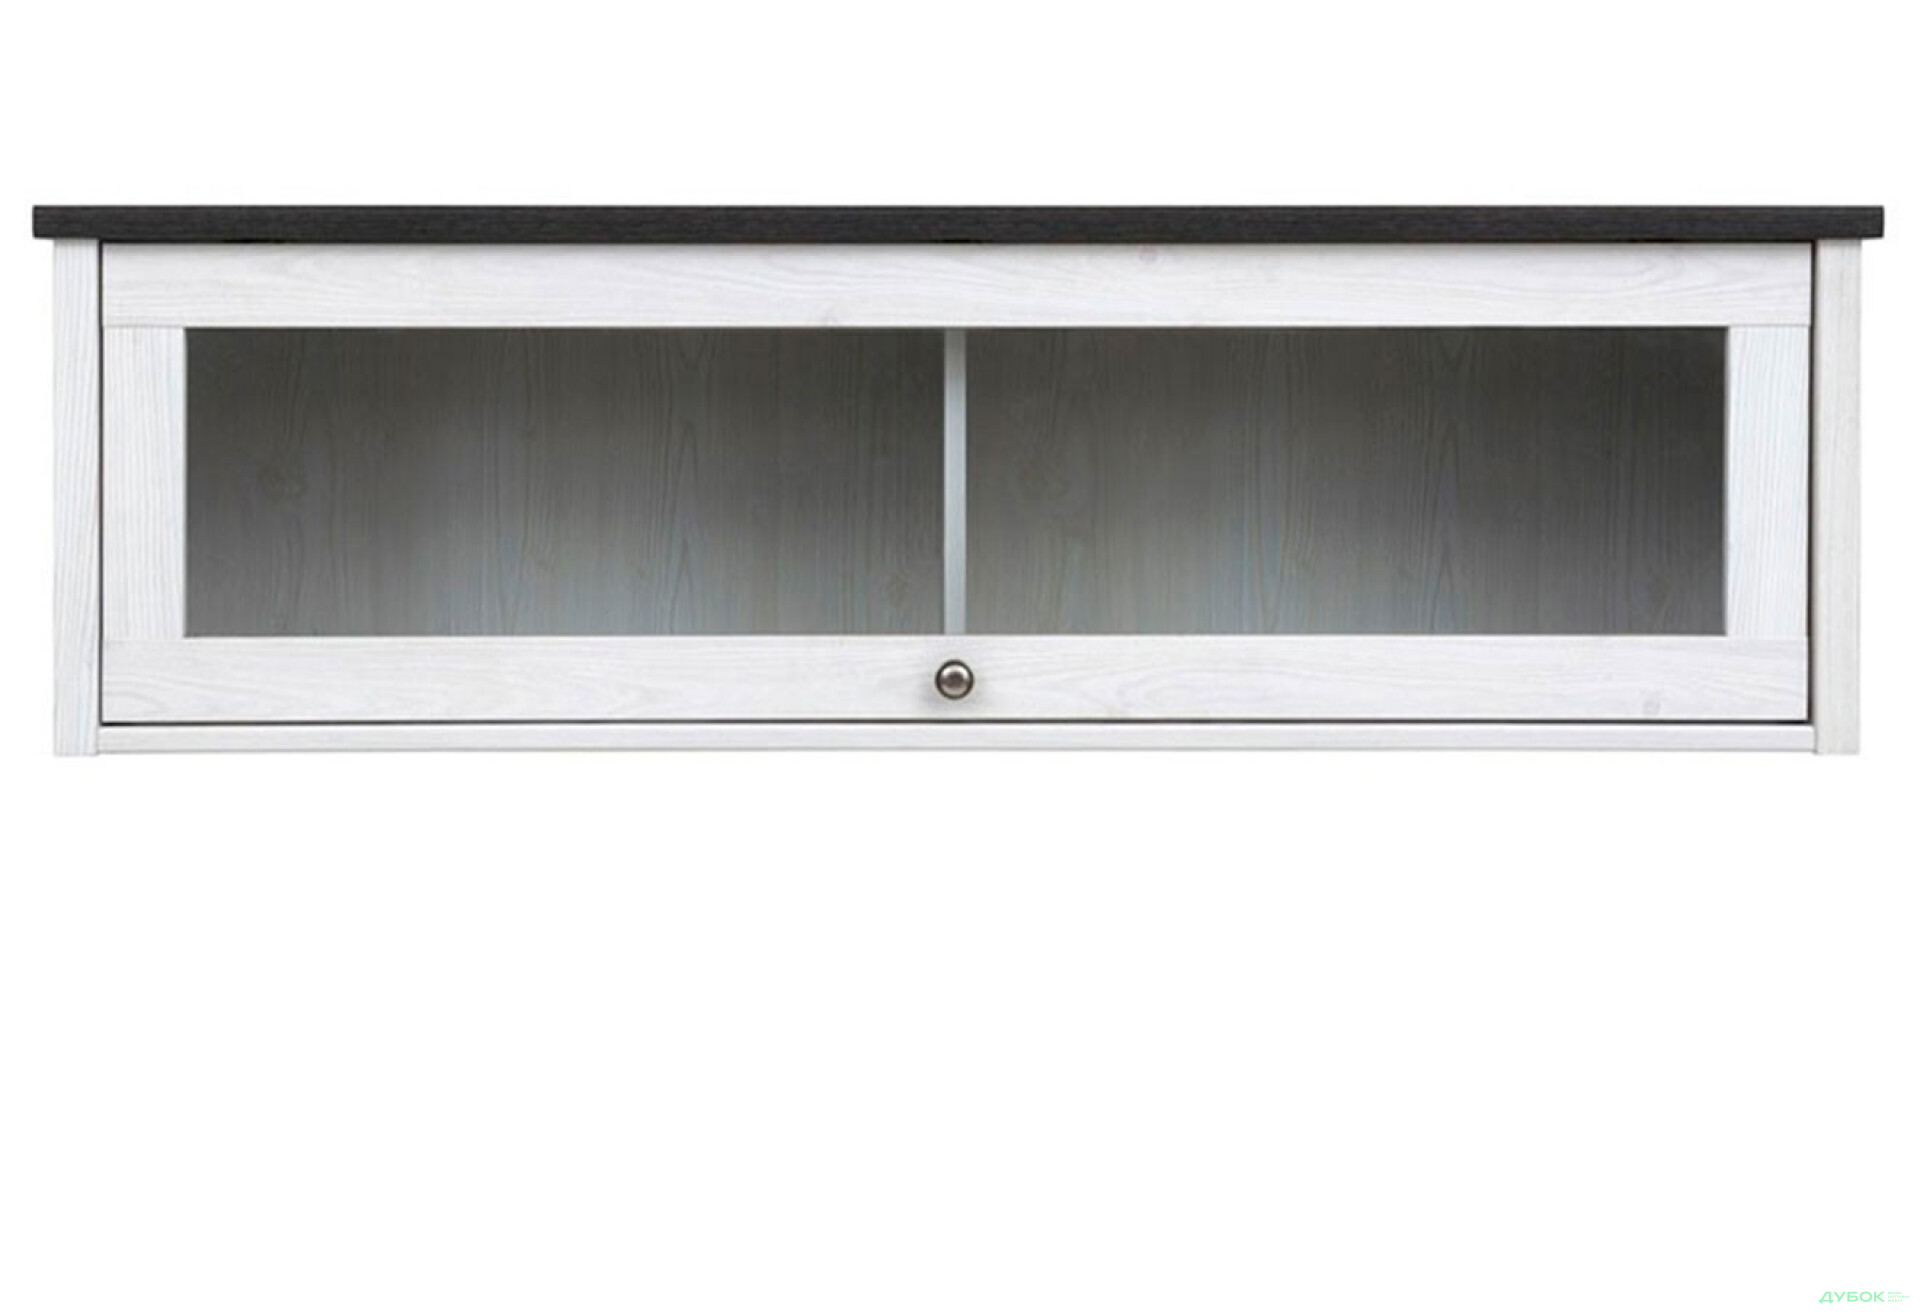 Фото 1 - Шкафчик-витрина навесной ВМК Порто 129 см Джанни/Сосна ларико